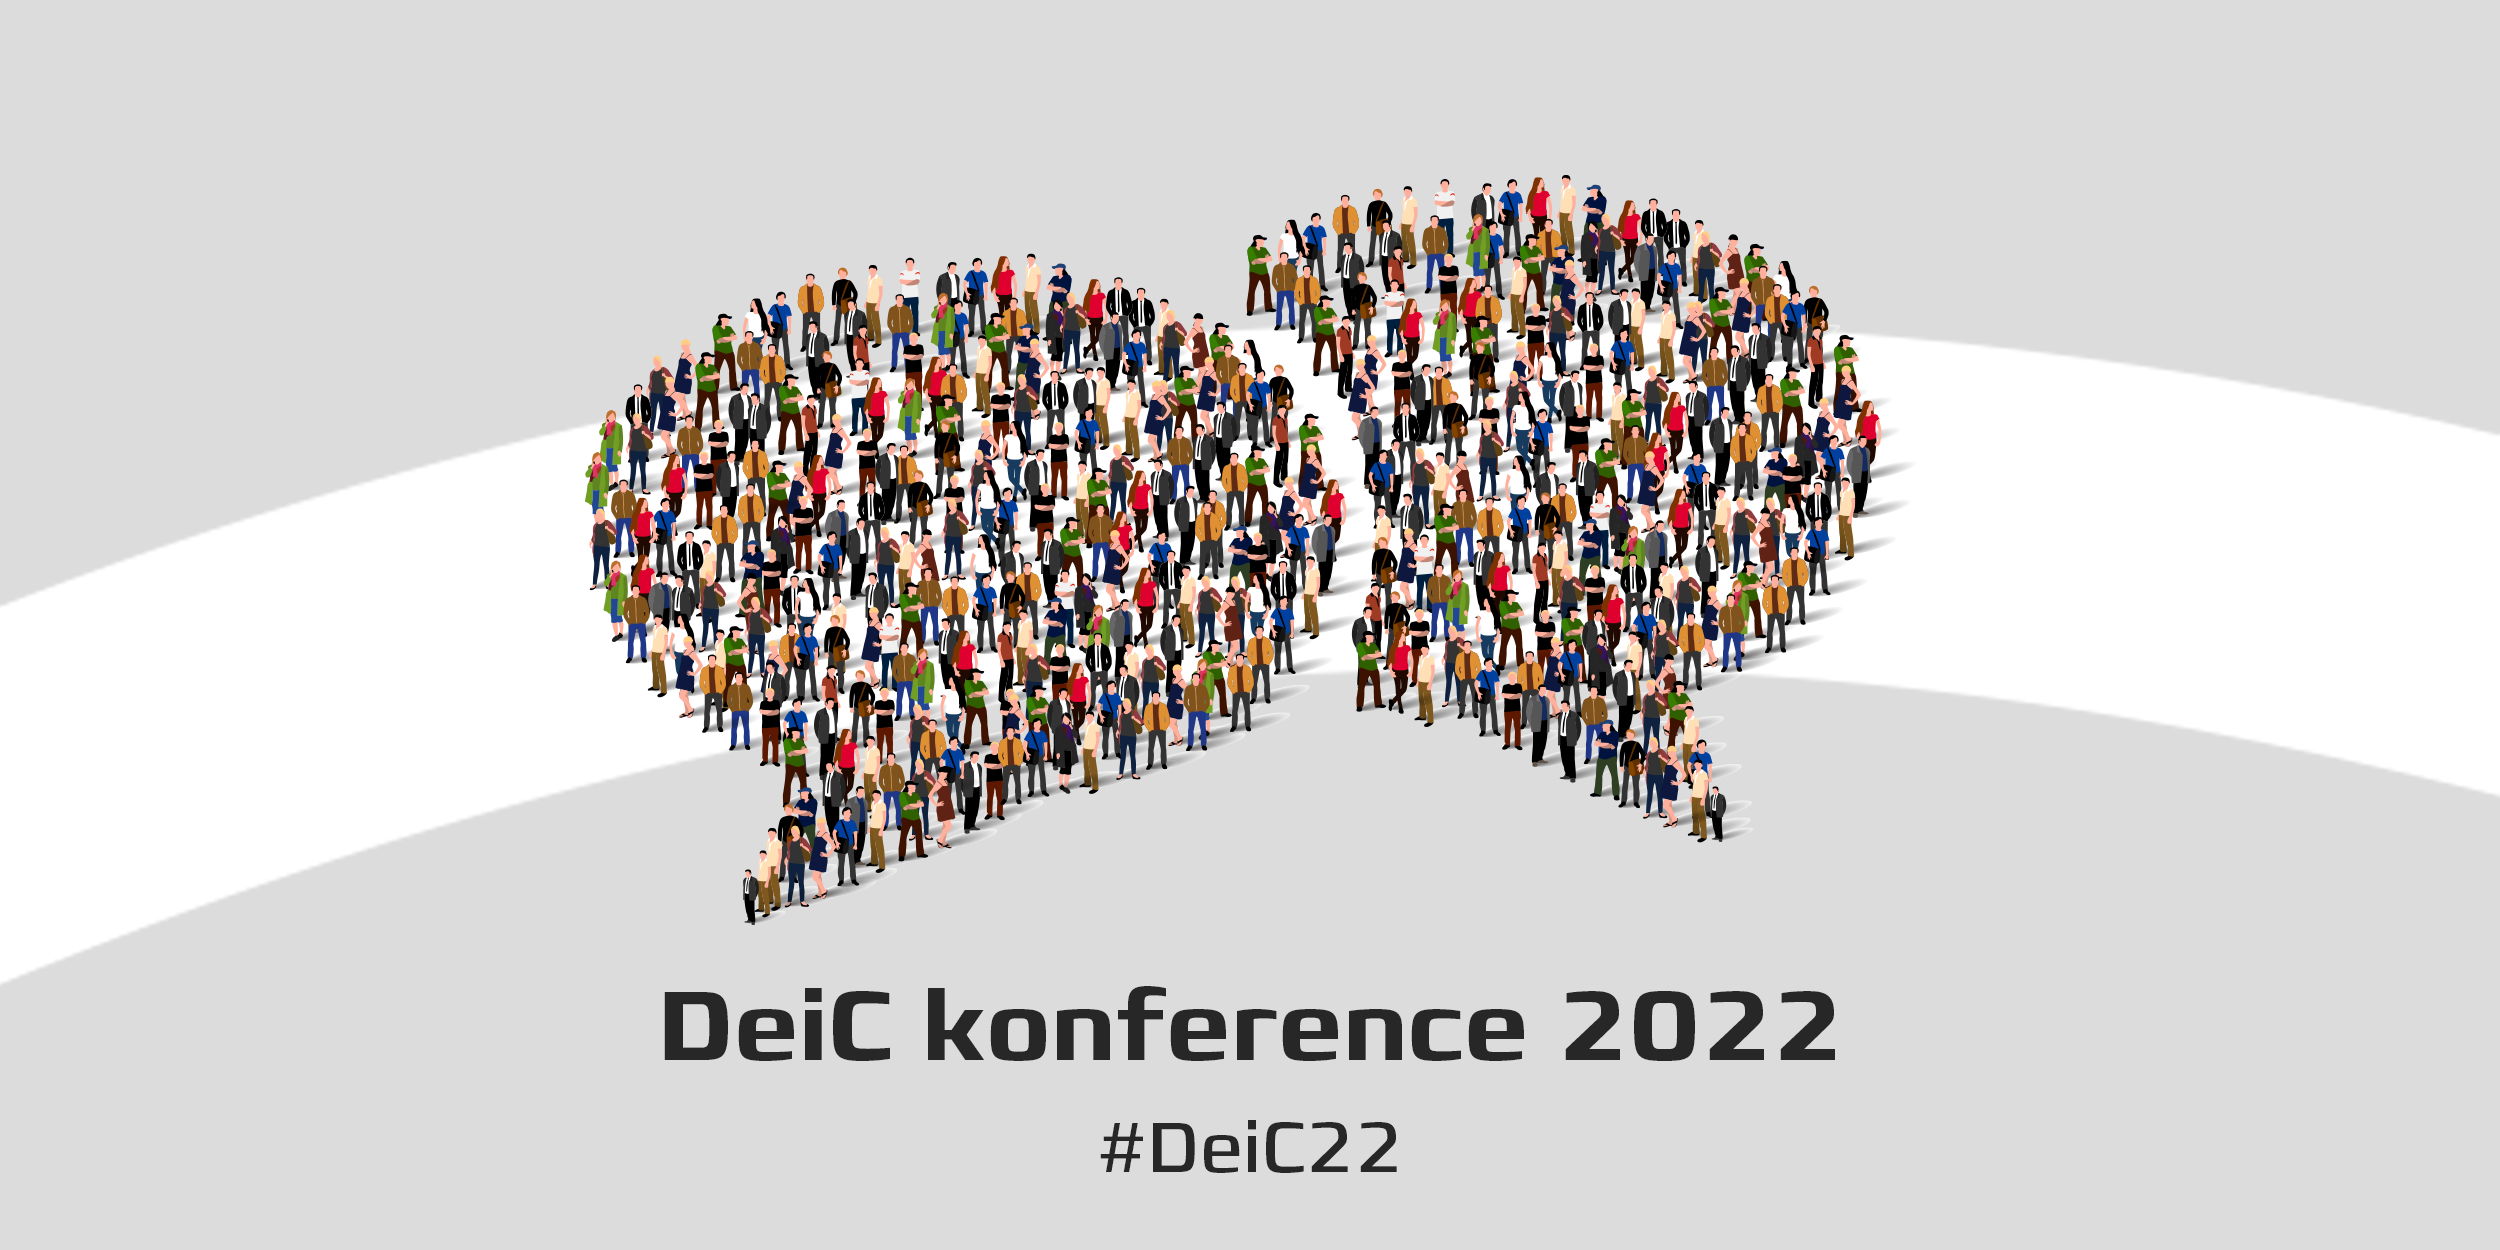 DeiC konference 2022